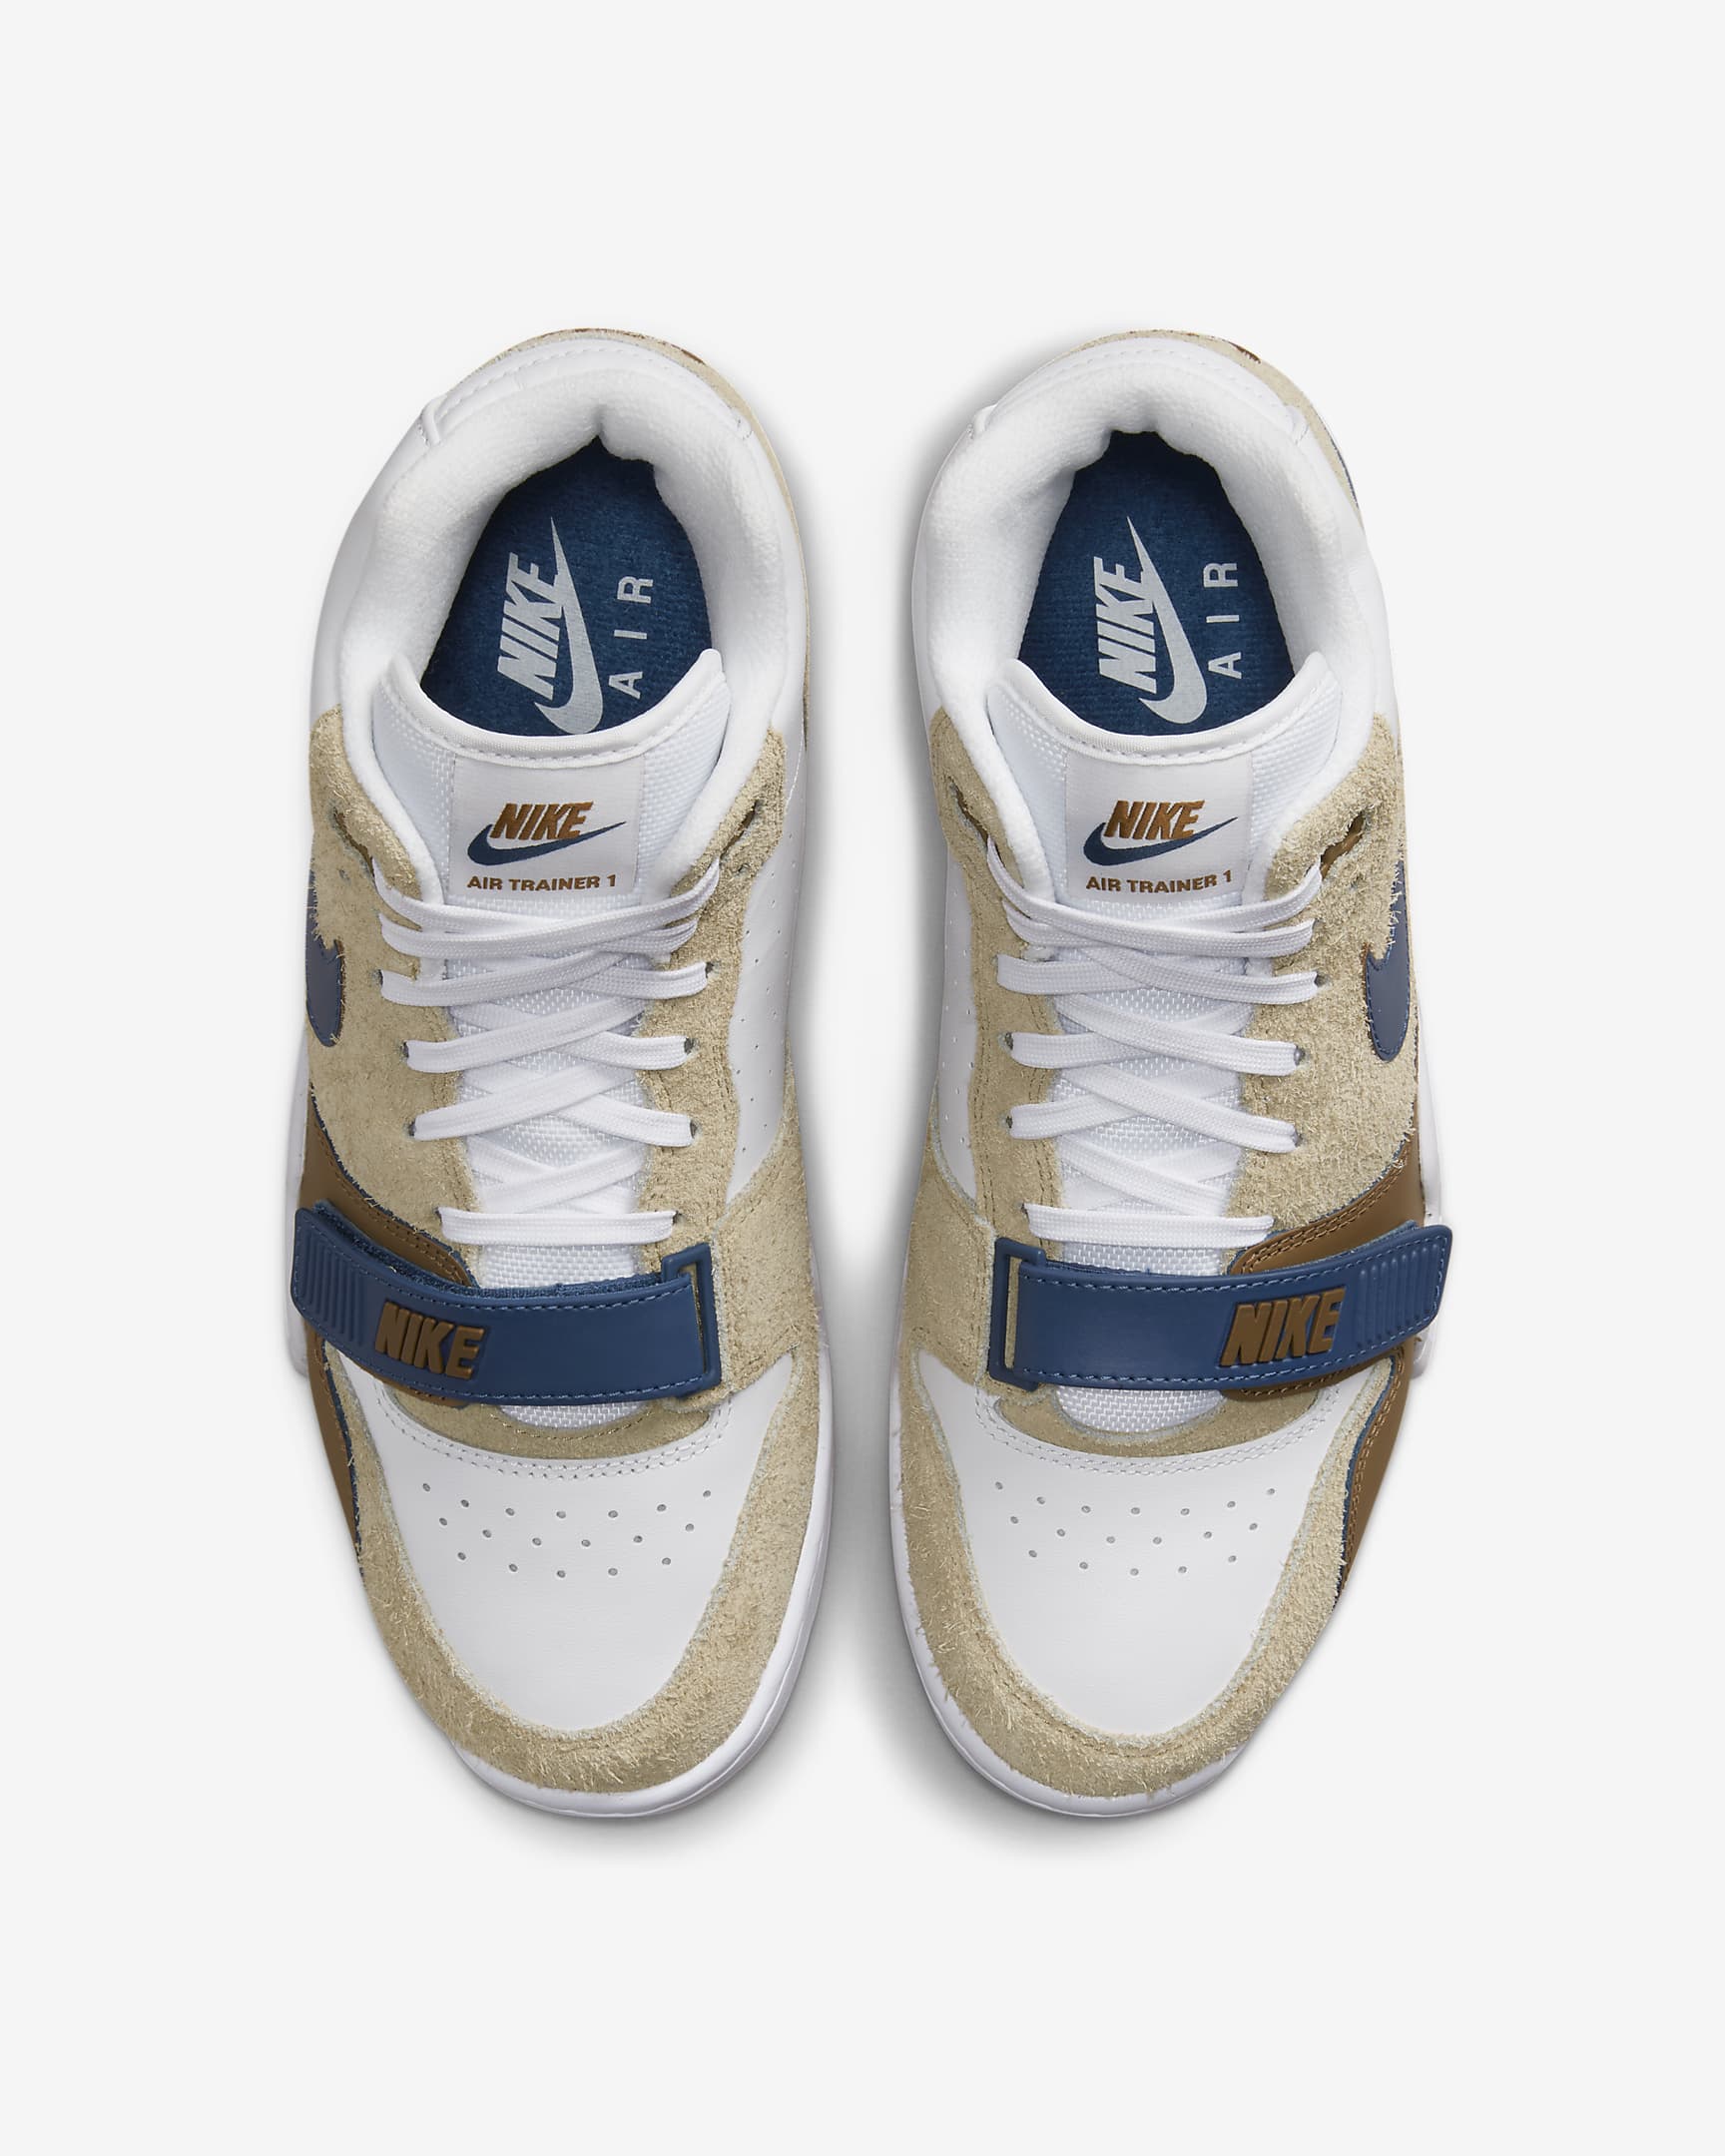 Nike Air Trainer 1 Men's Shoes - Limestone/Ale Brown/White/Valerian Blue